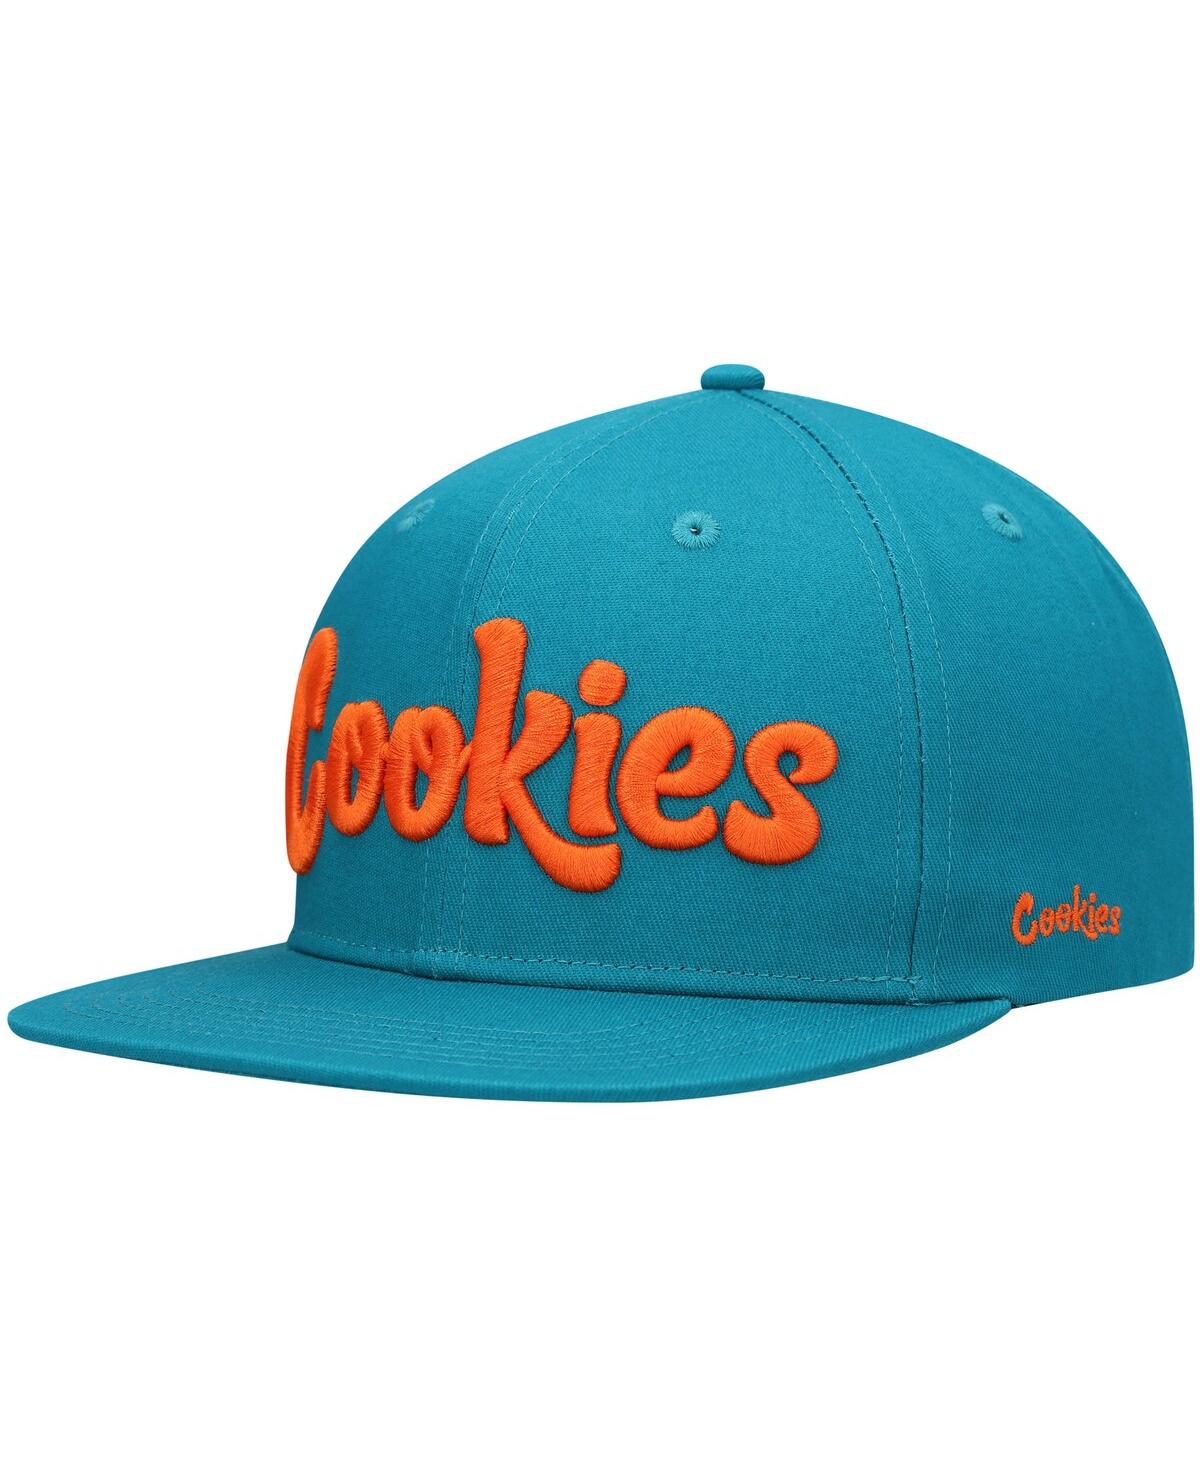 Cookies Men's  Teal Original Mint Snapback Hat